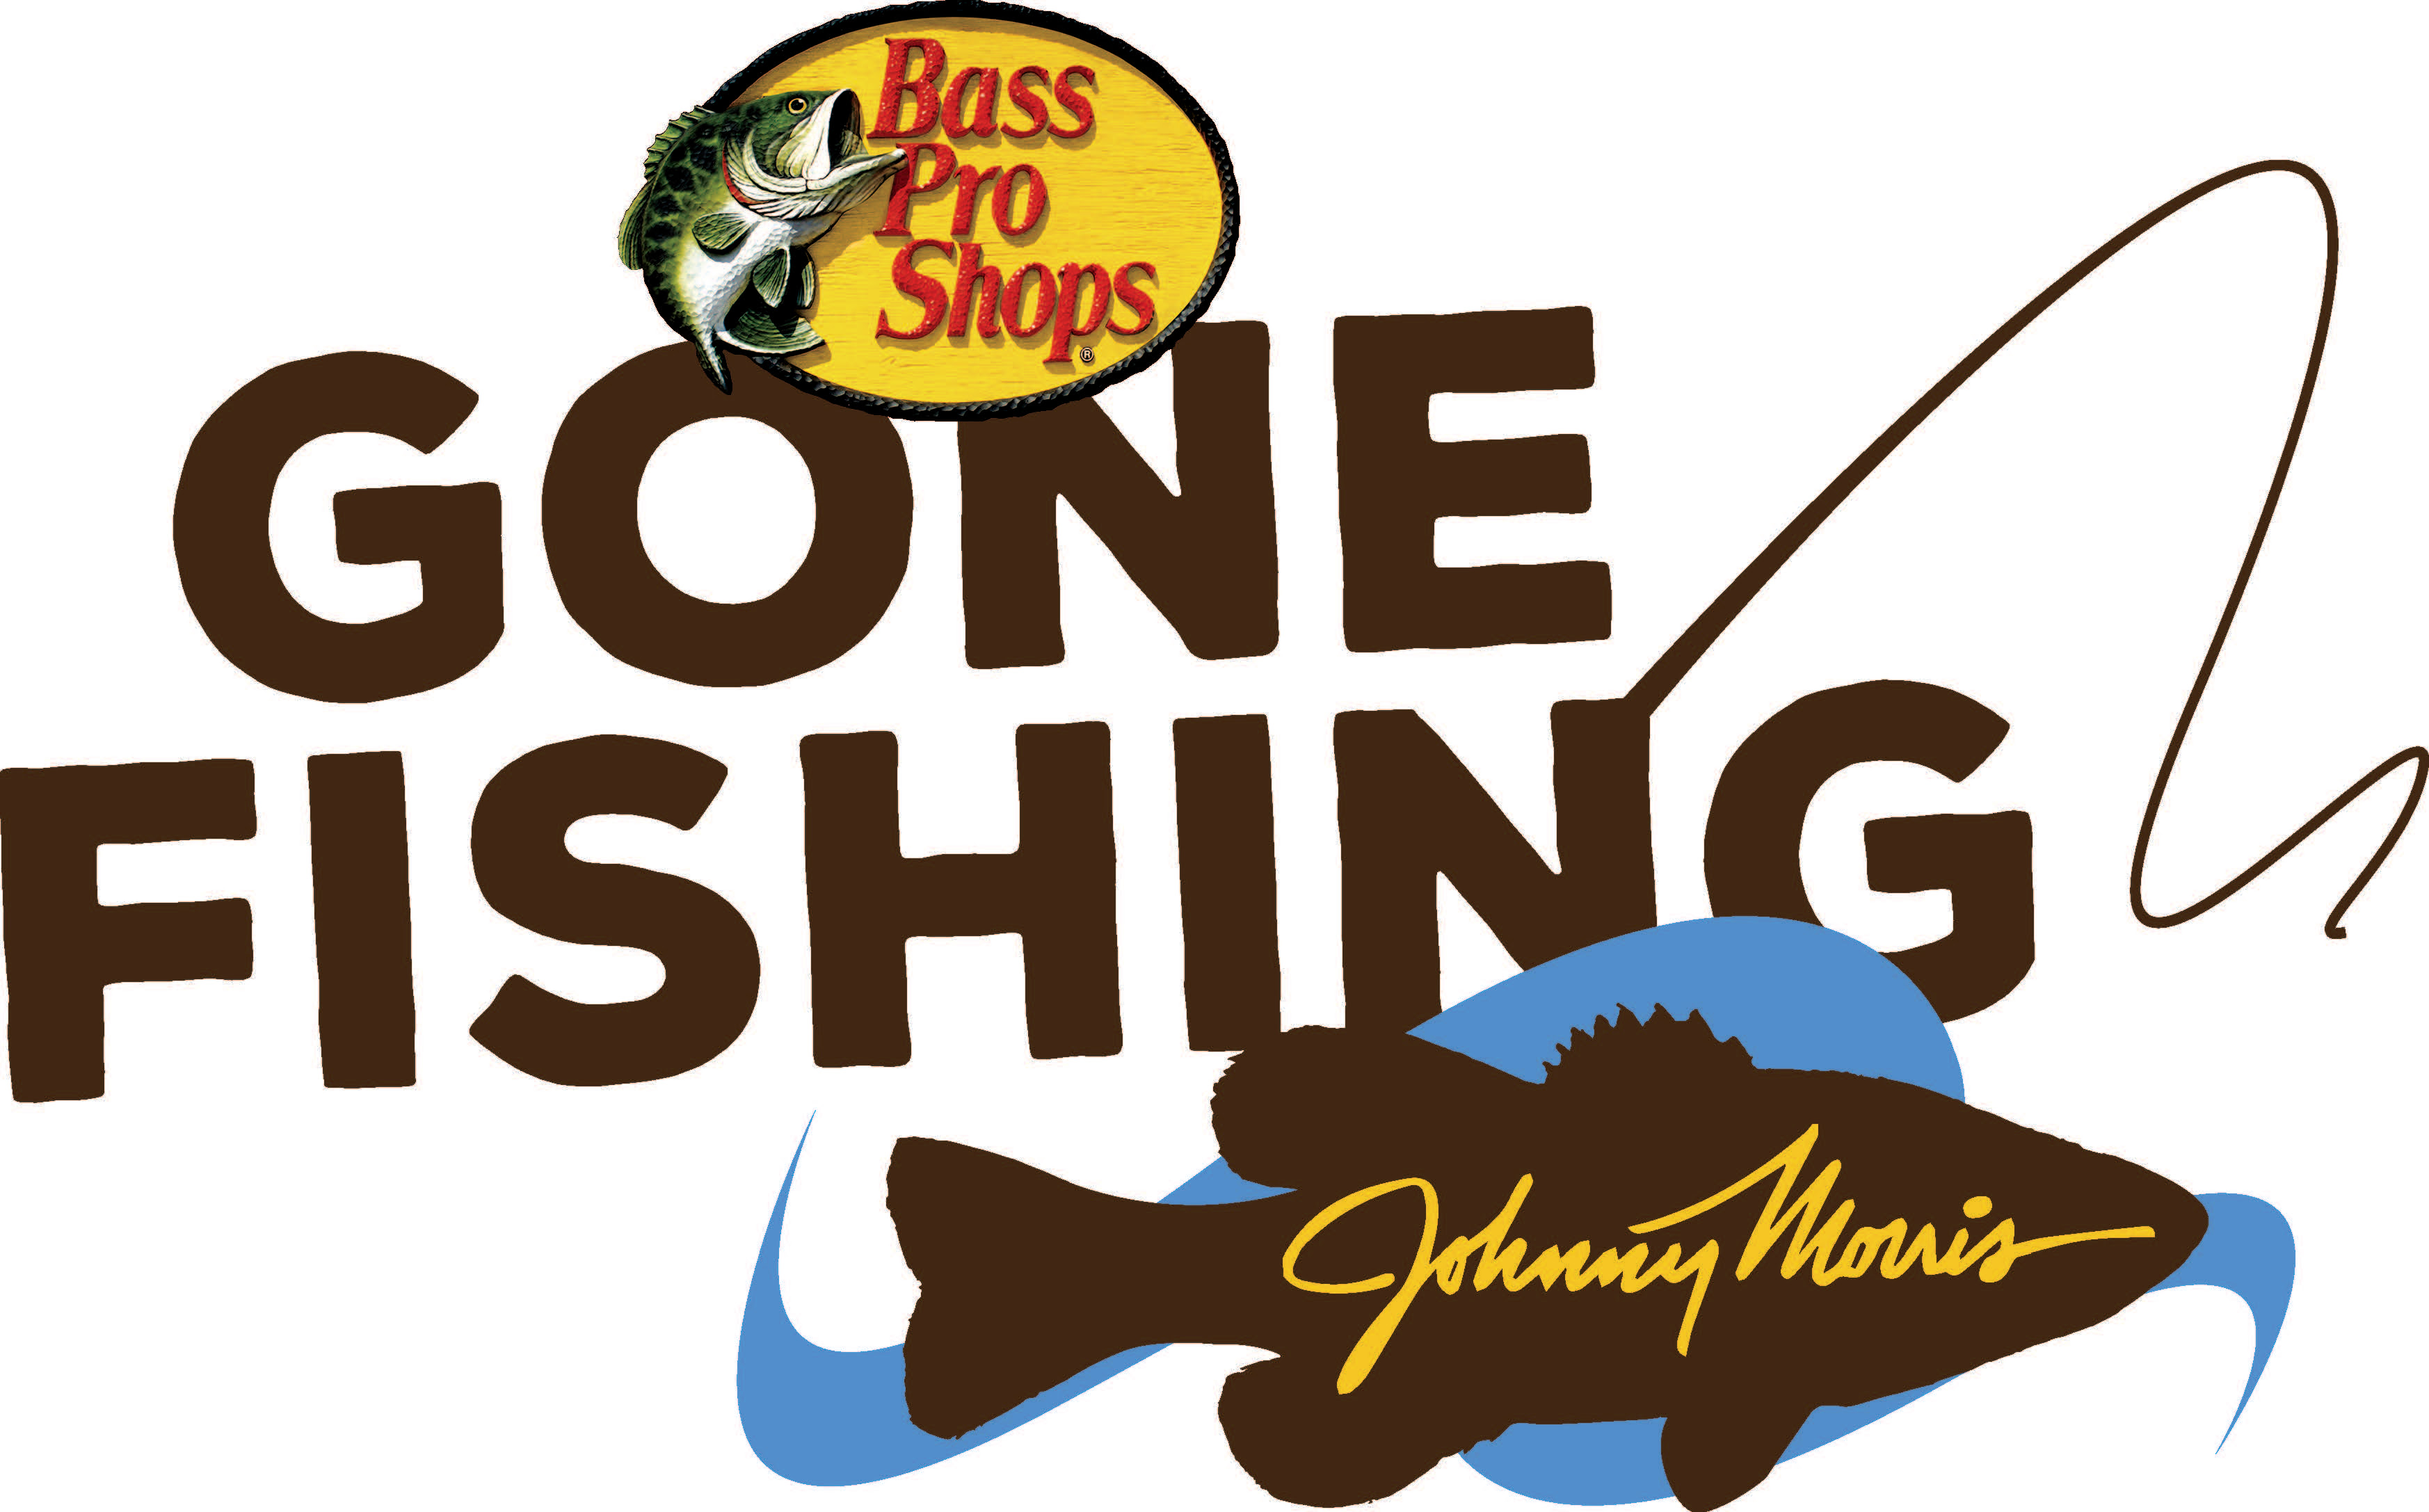 I like go fishing. Gone Fishing. Gone Fishing логотип. Pro Bass Fishing. Fun Fishing логотип.